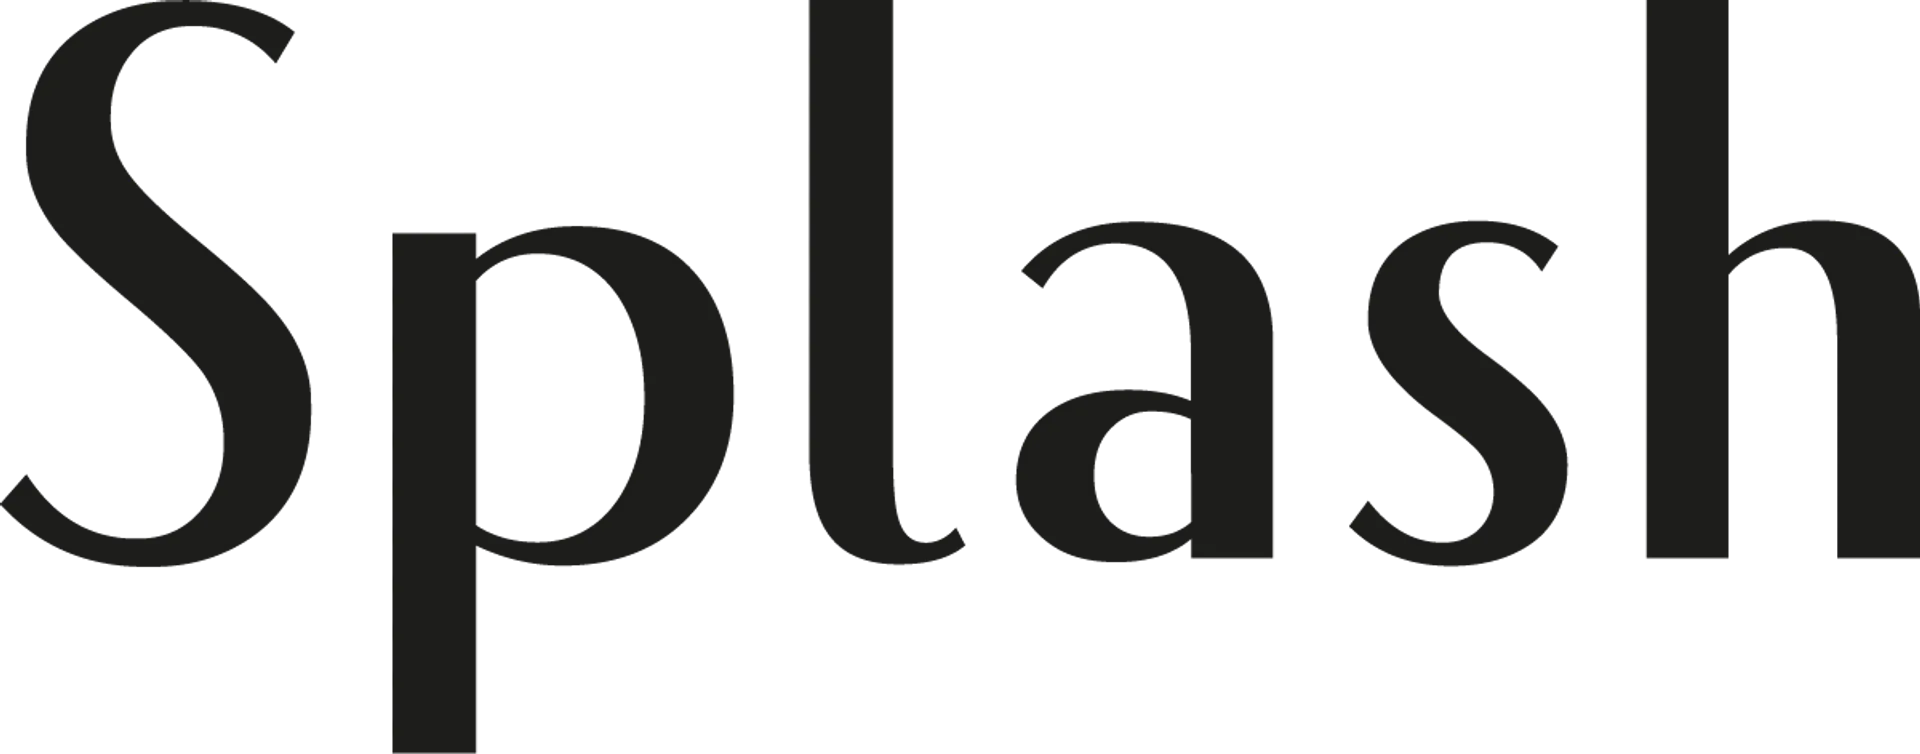 SPLASH logo. Current weekly ad